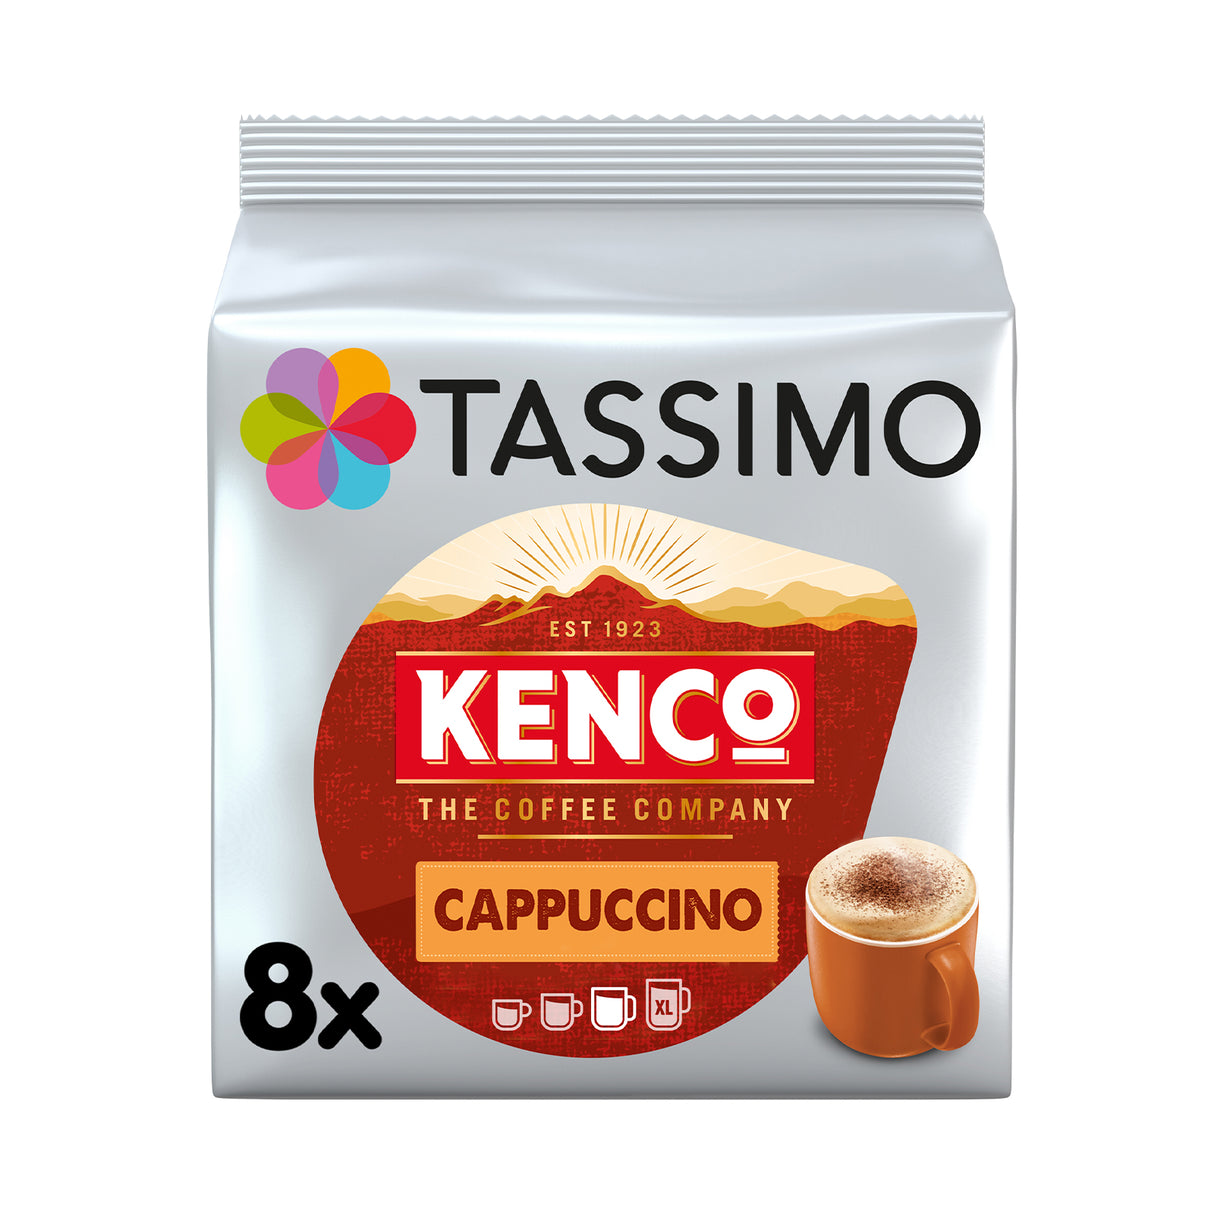 Tassimo Kenco Cappuccino pack